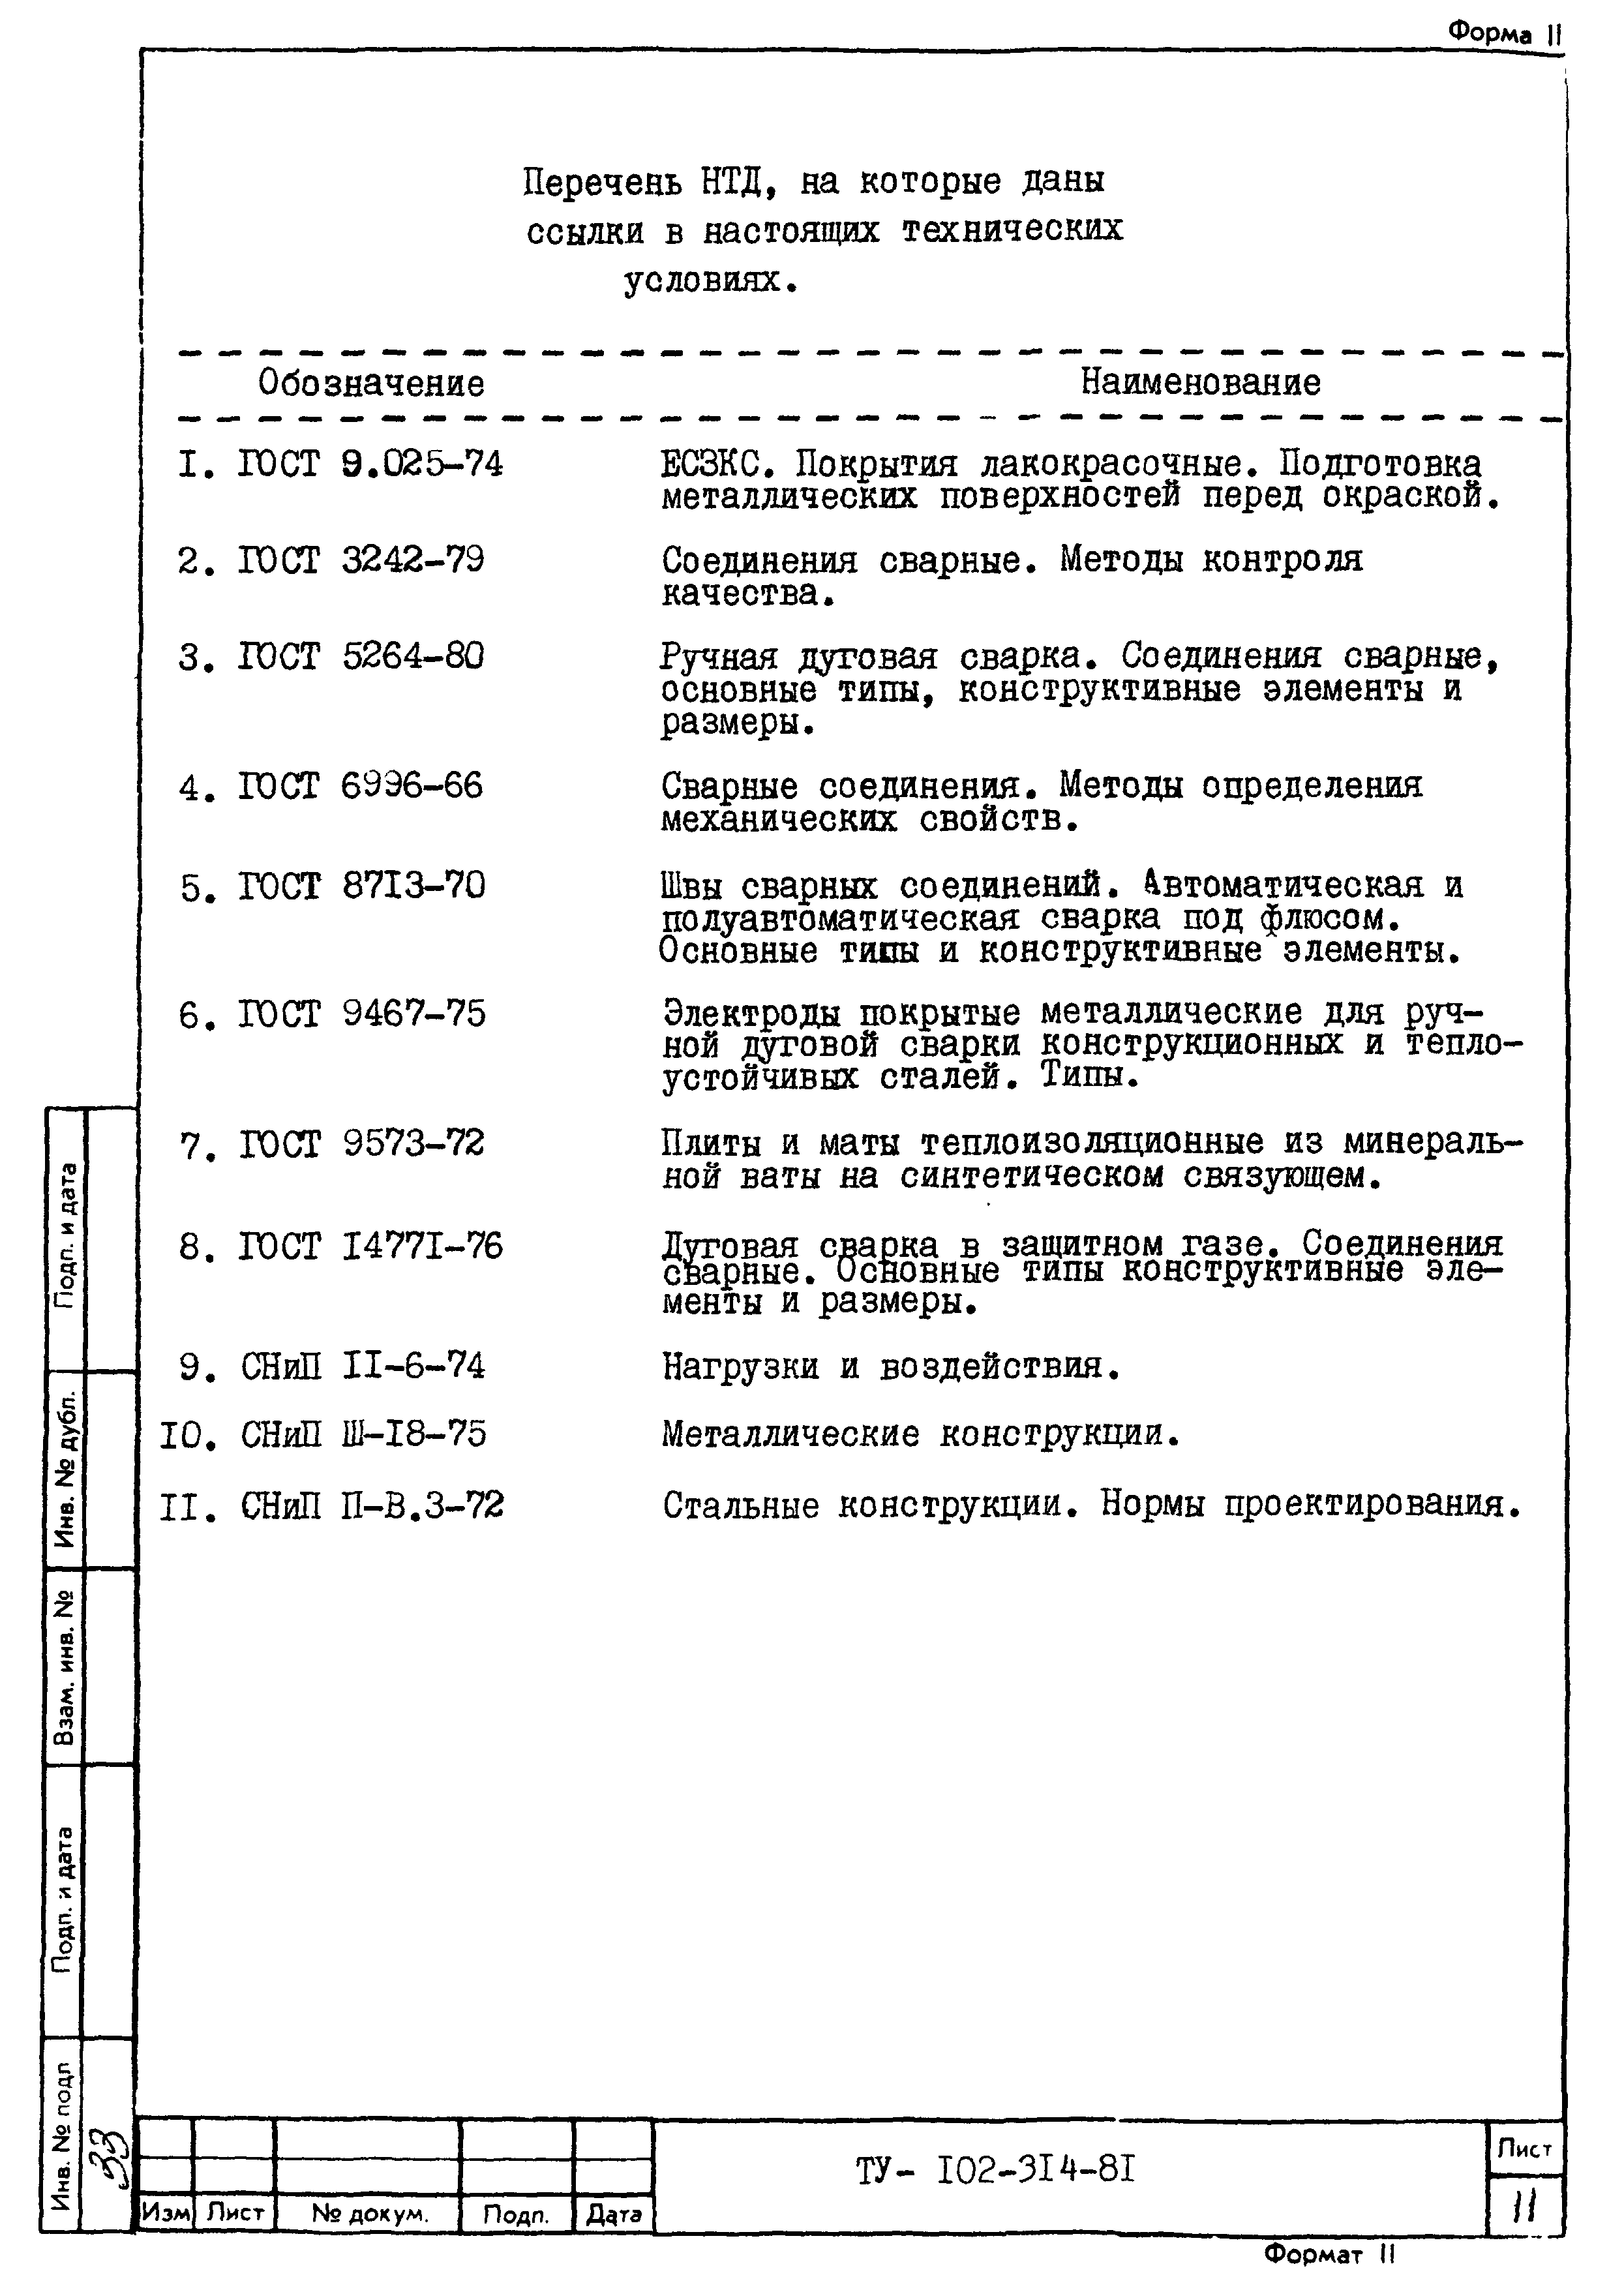 ТУ 102-314-81